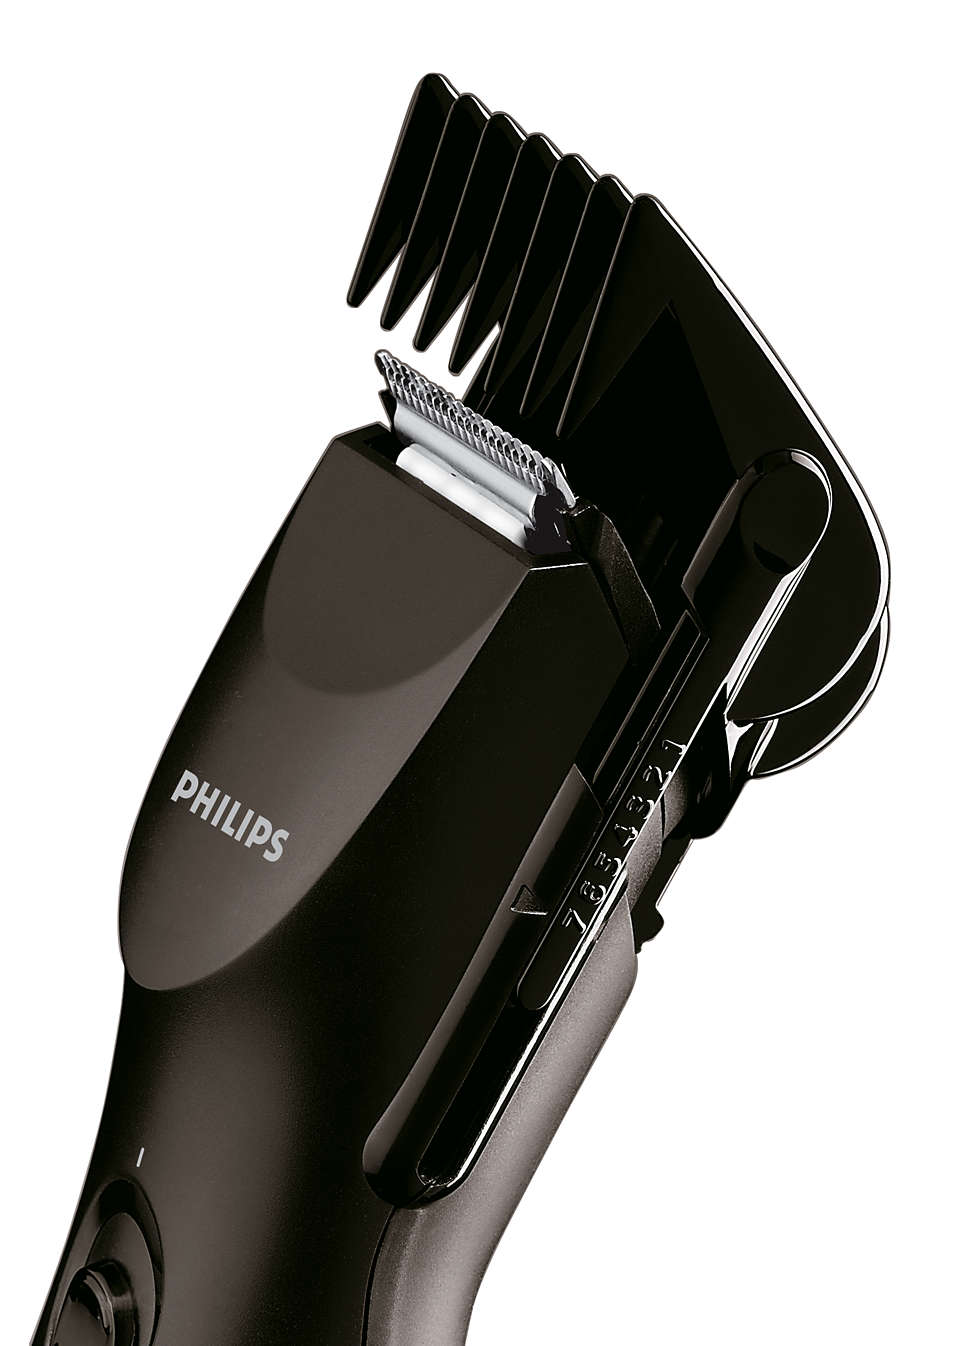 Гребень philips. Philips qc5002. Машинка для стрижки Philips qc5002. Гребень Филипс qc5002. Филипс QC 5002.